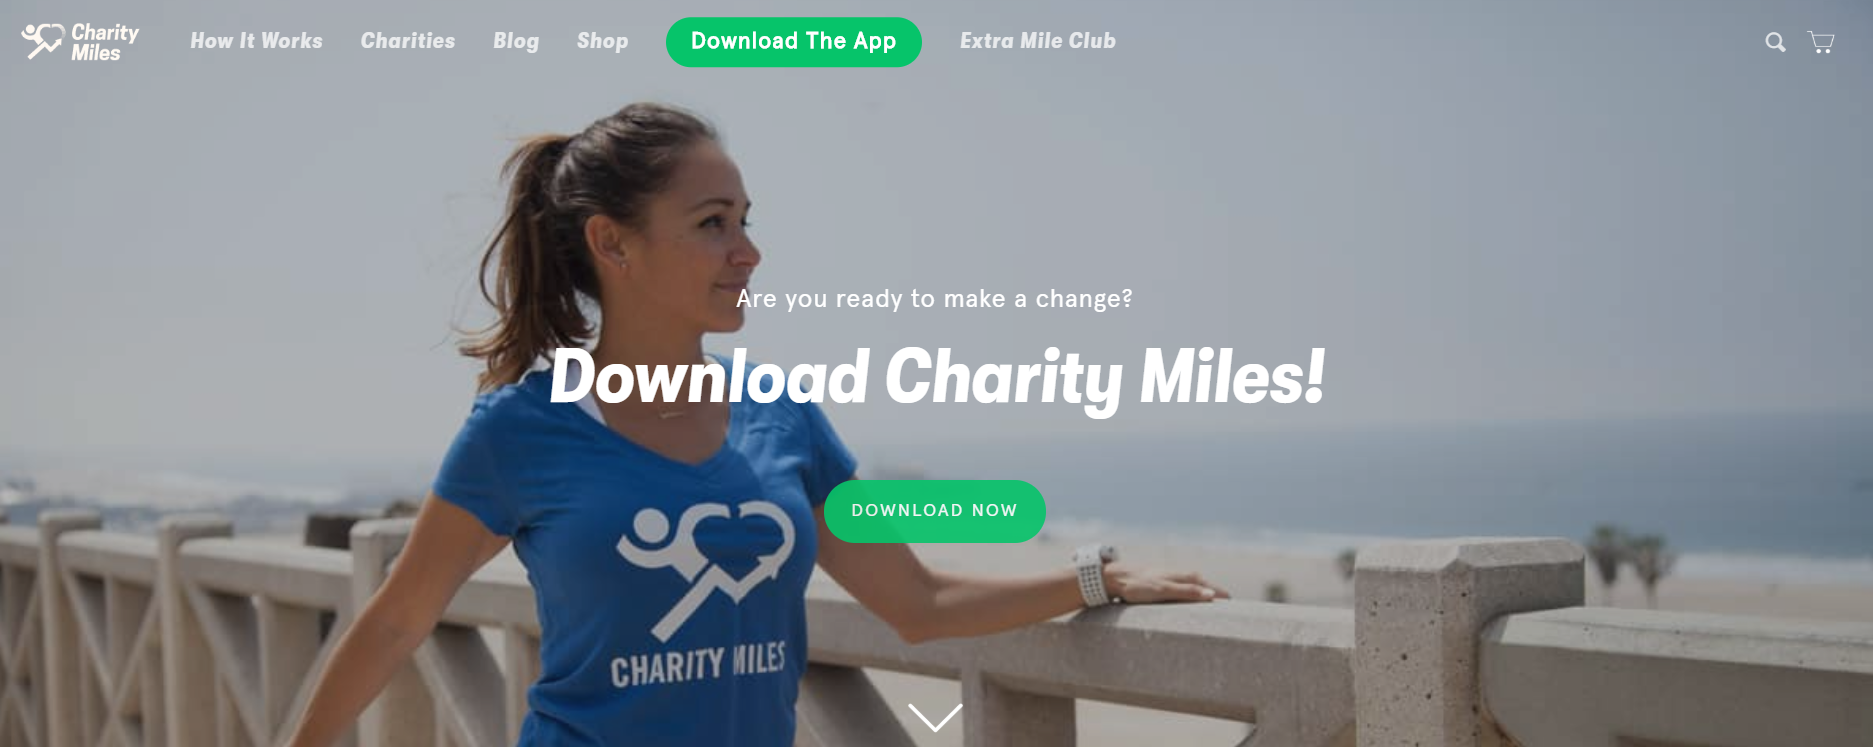 Charity-Miles-App